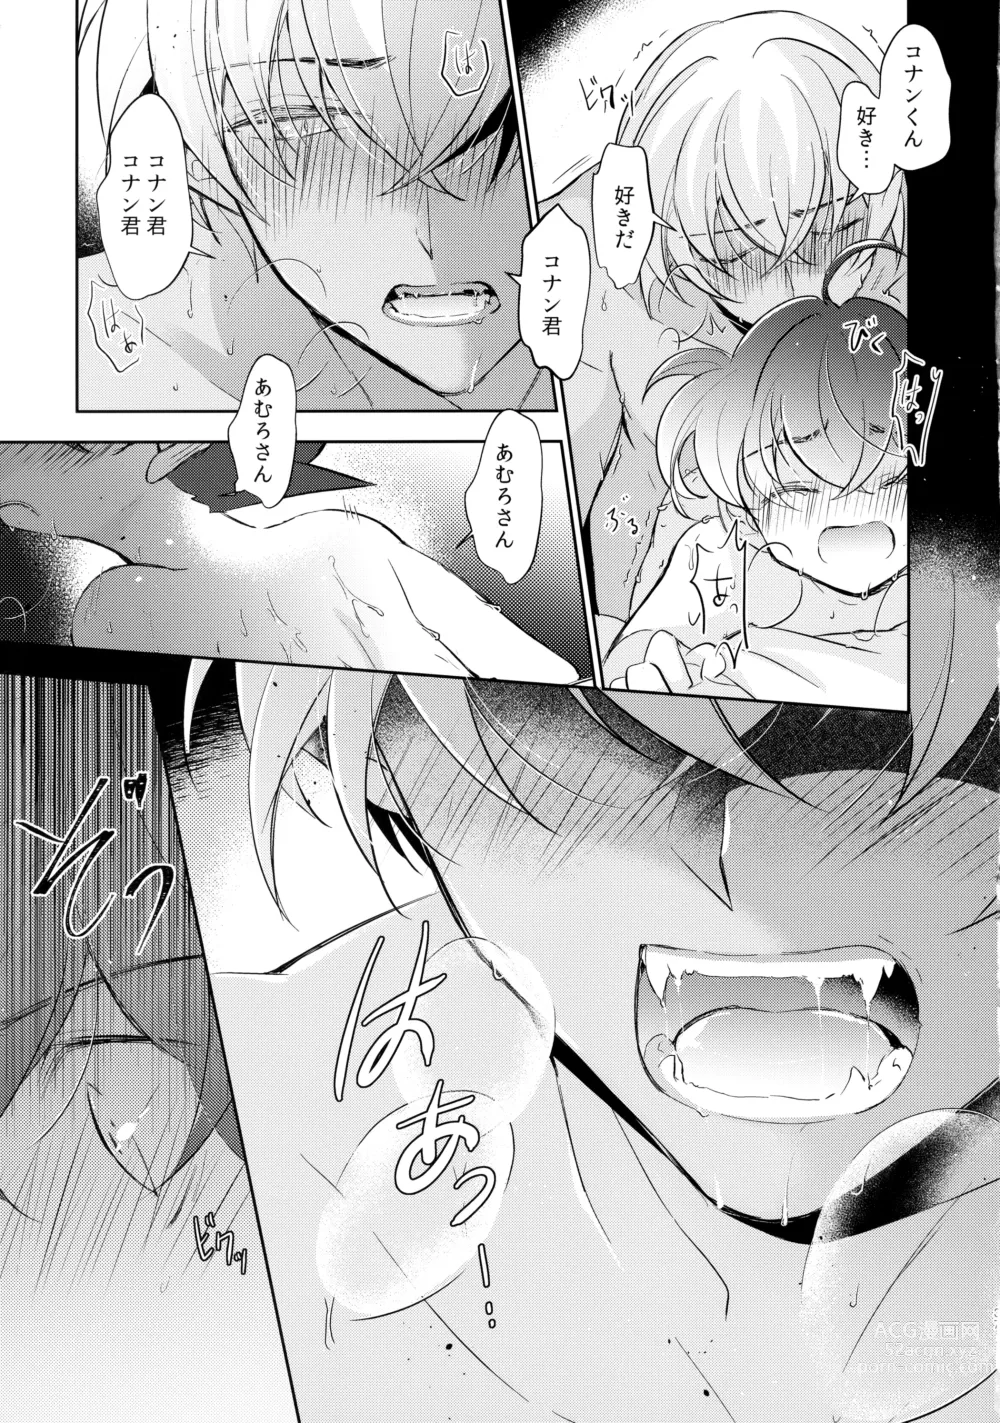 Page 37 of doujinshi Ecstasy